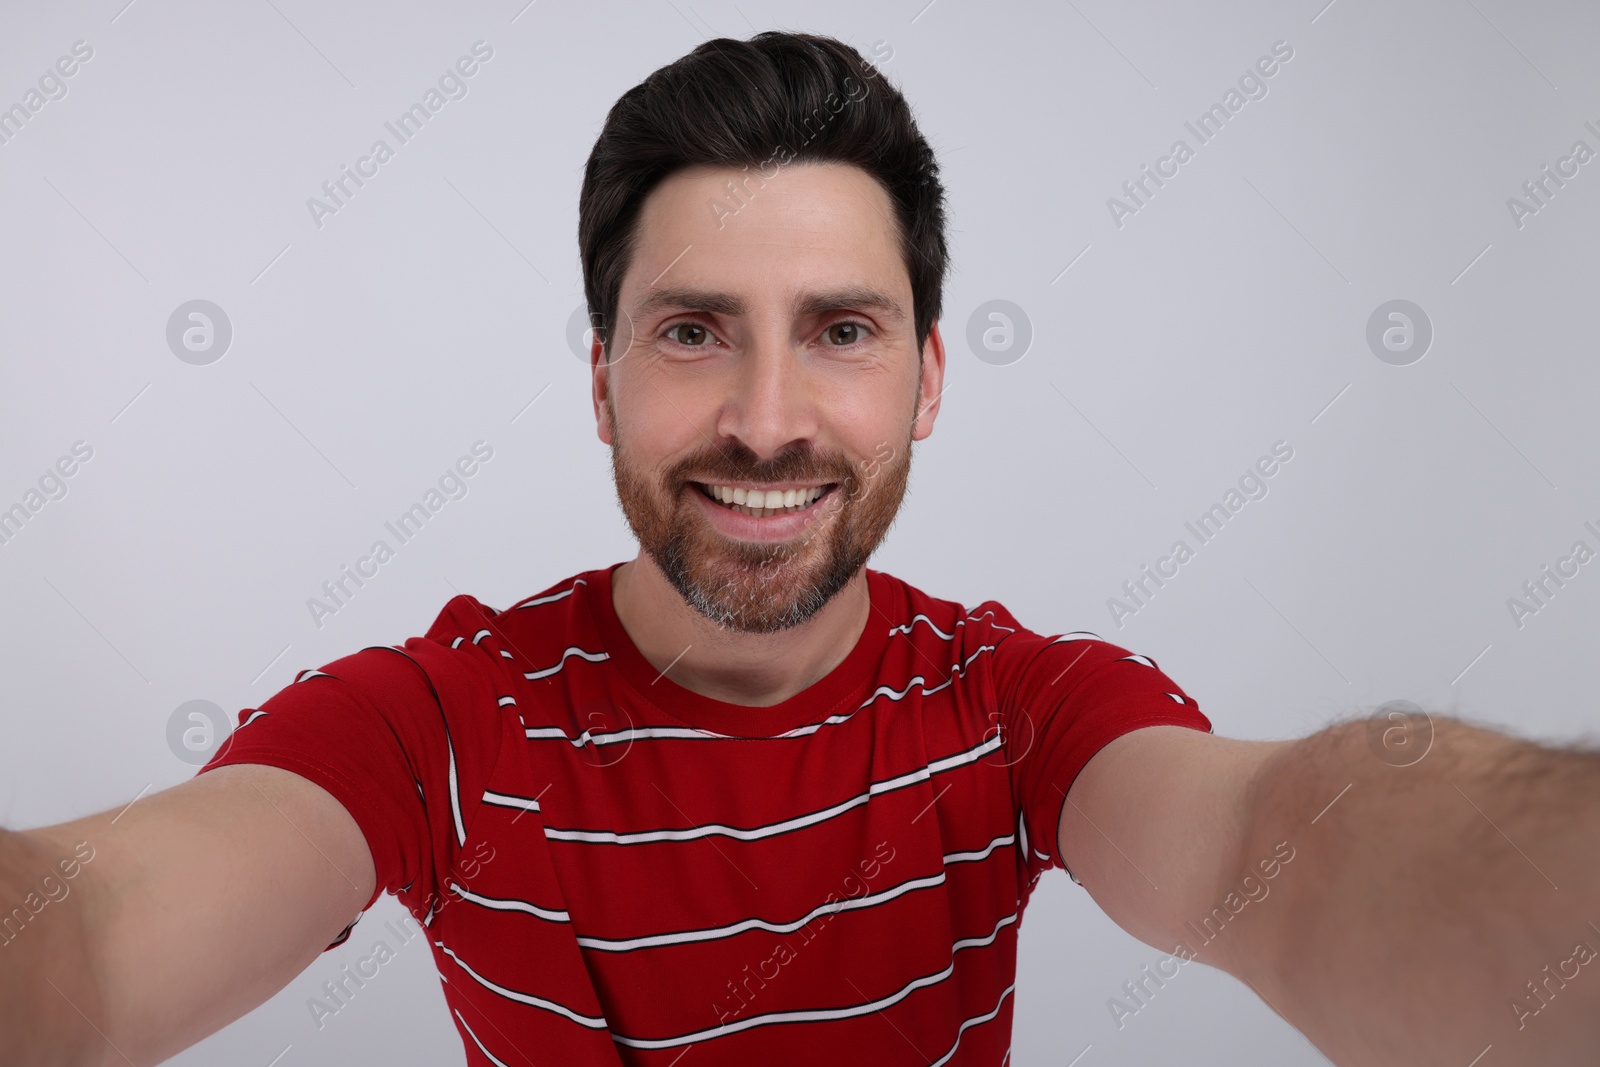 Photo of Smiling man taking selfie on white background